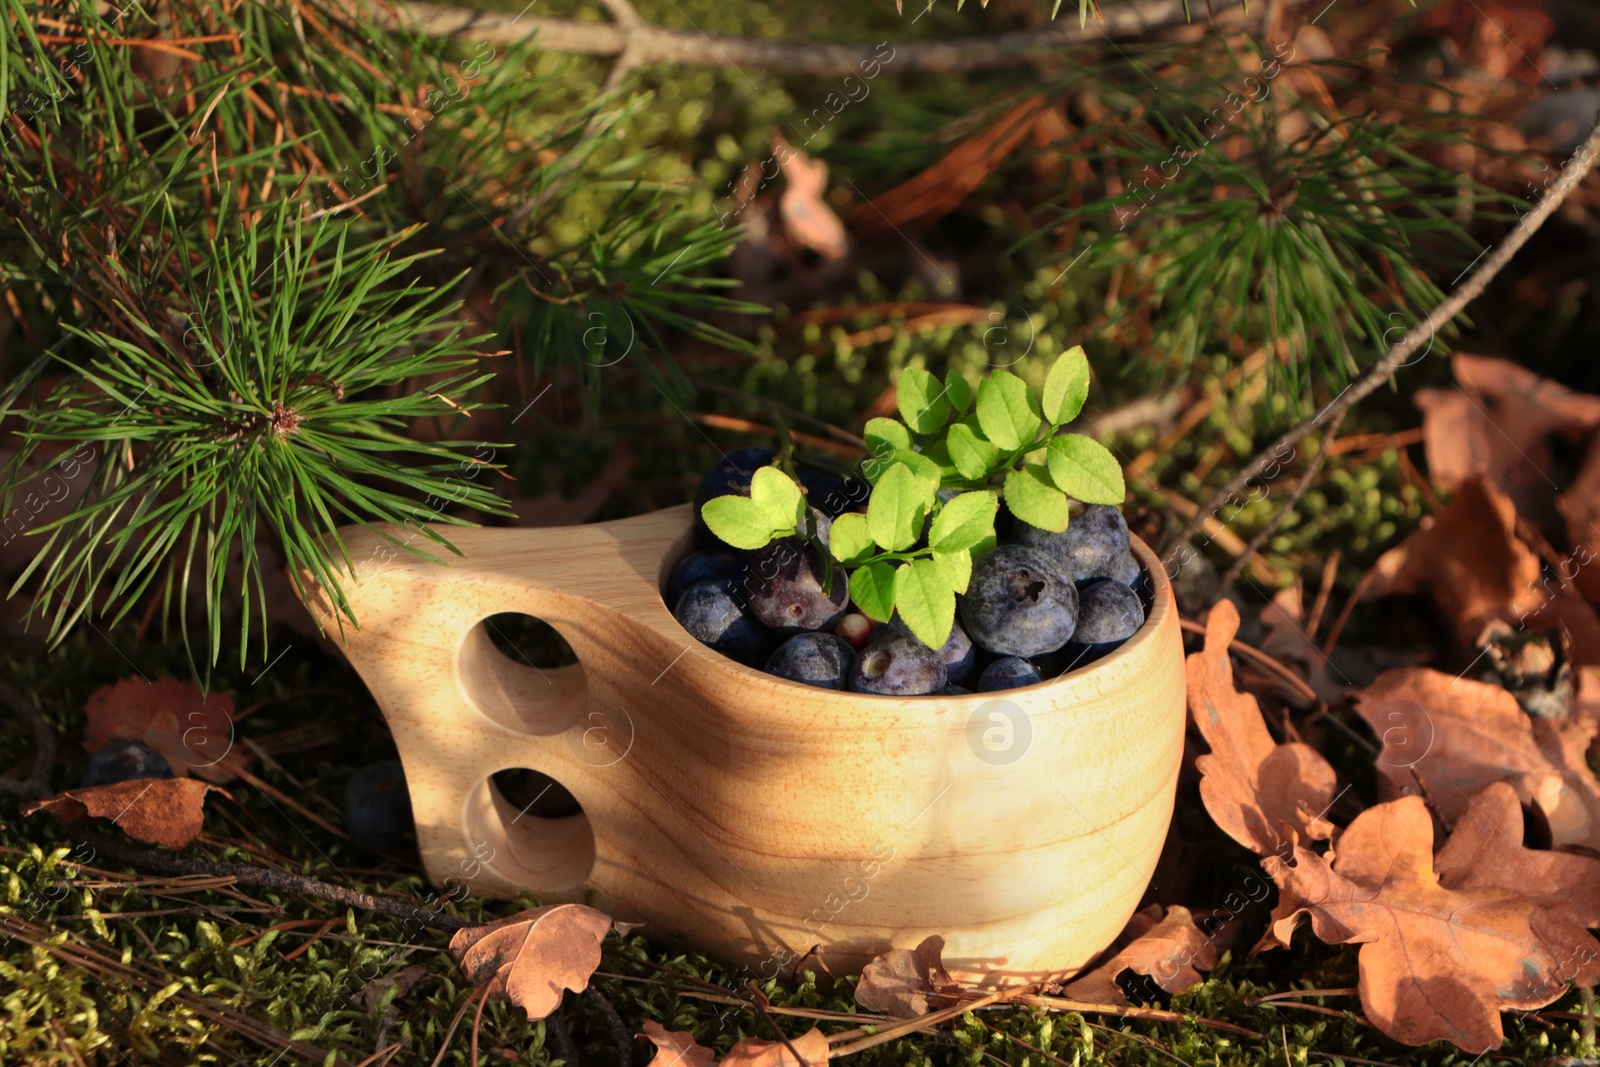 Photo of Wooden mug full of fresh ripe blueberries and lingonberries on grass